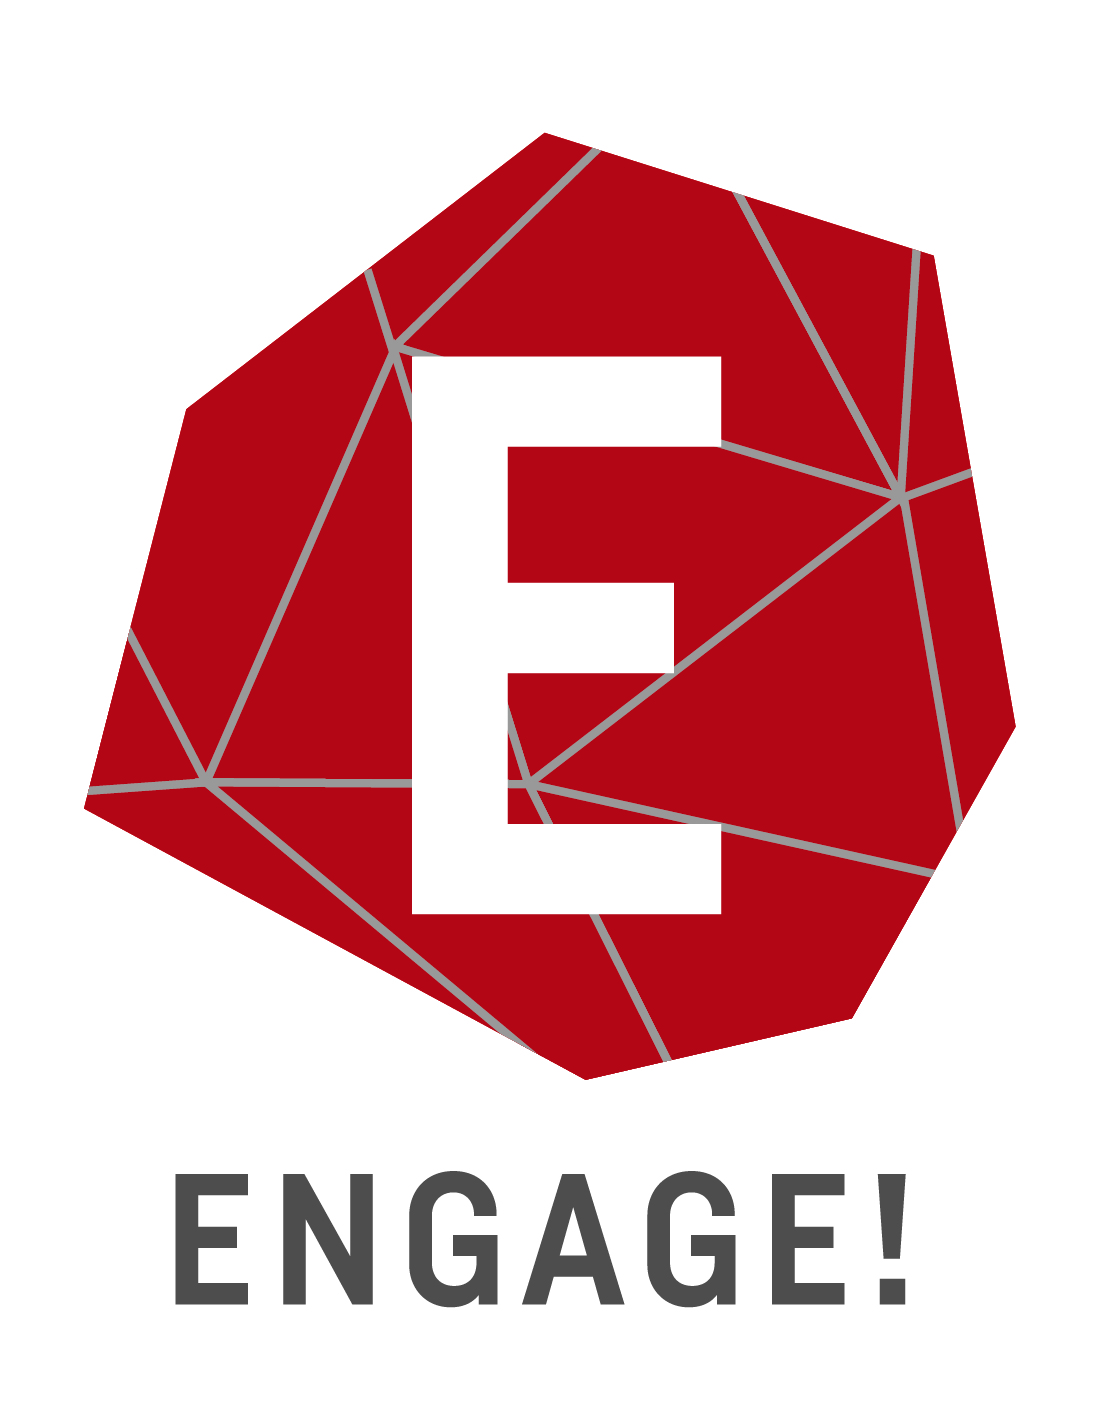 Engage 2018 logo high res (002).jpg